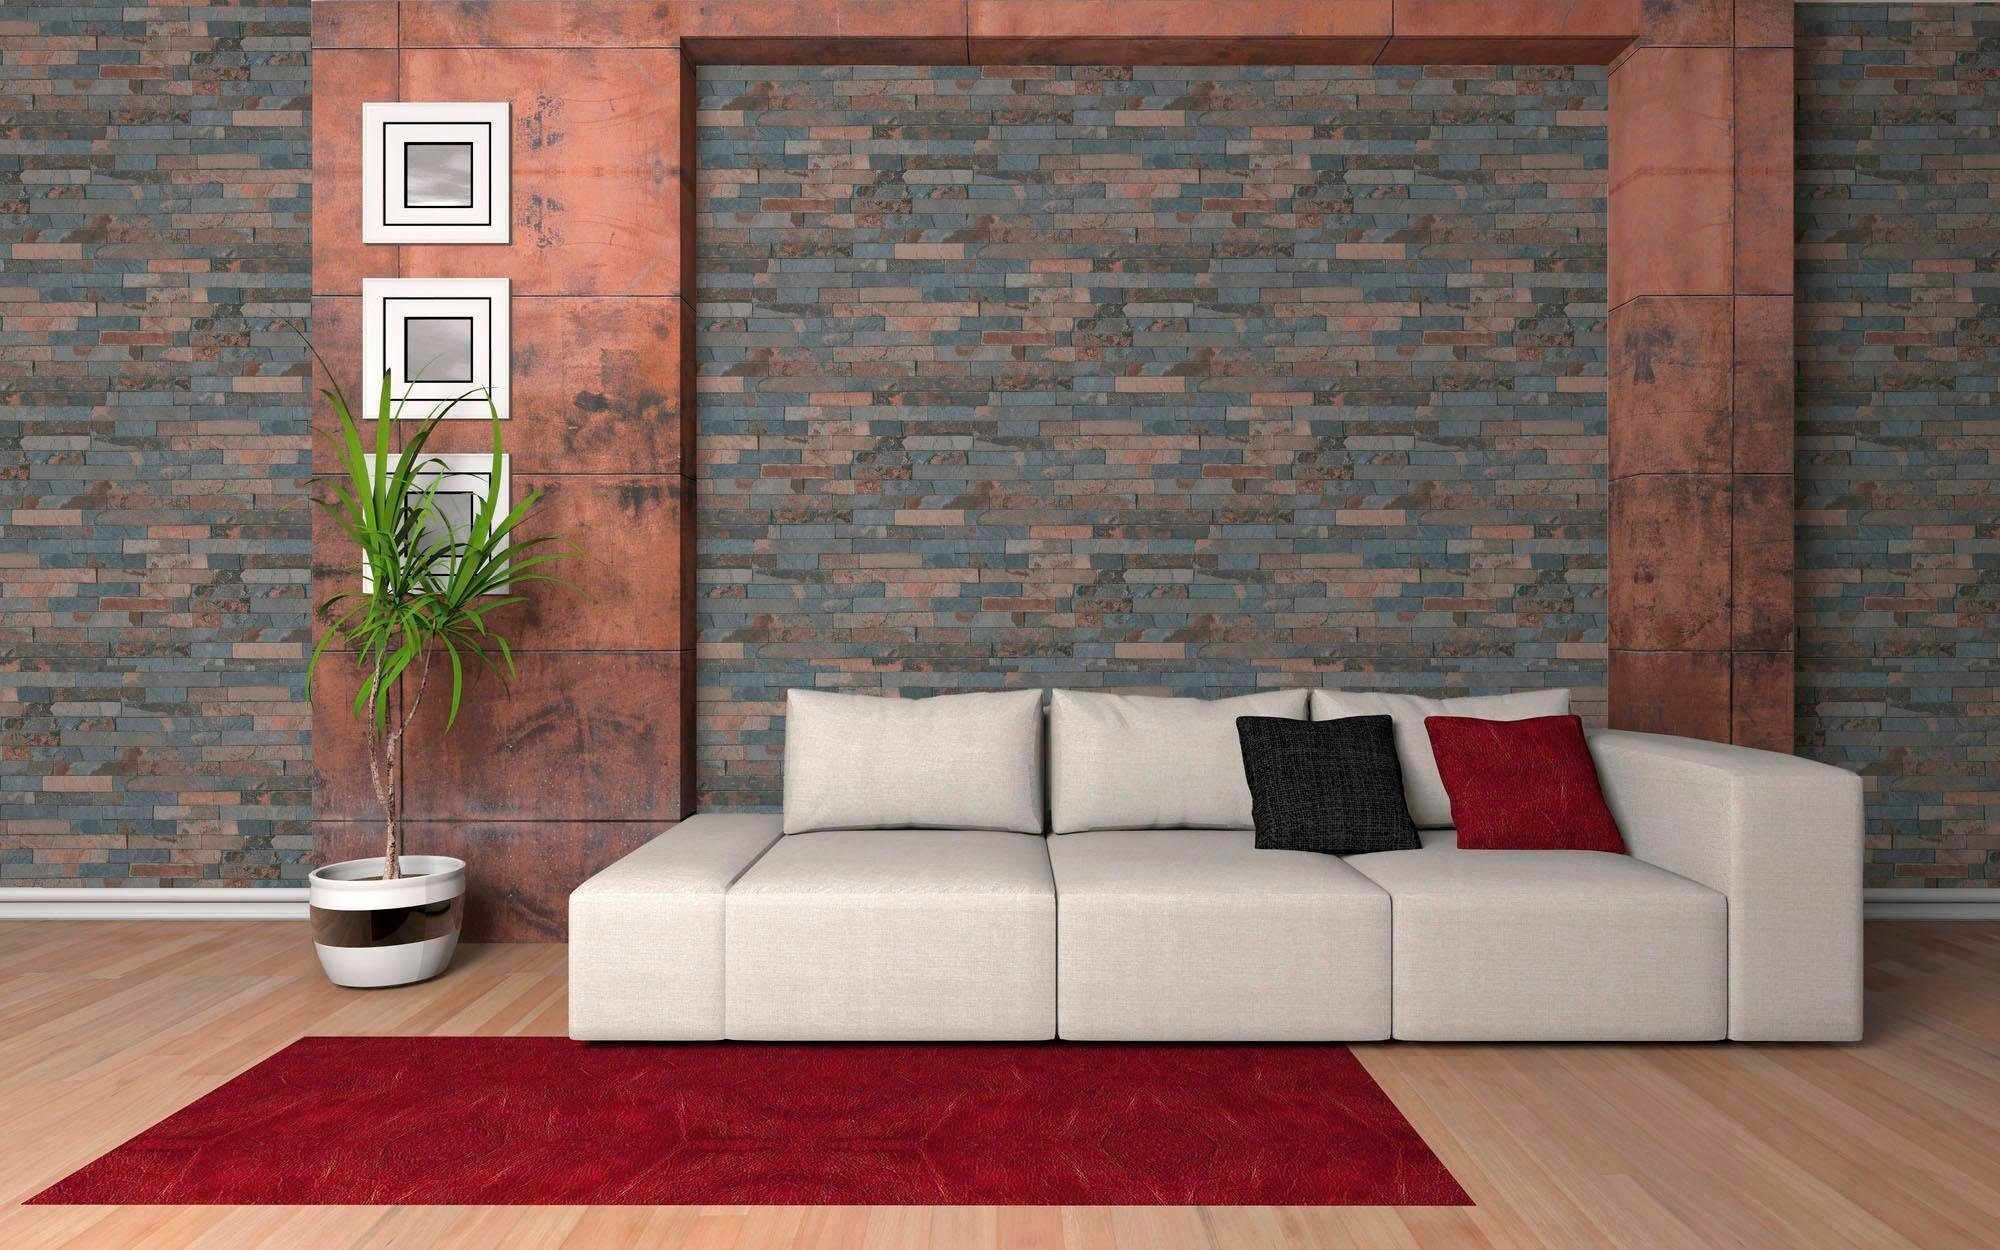 Vliestapete Edition, Stone of Stein Best Wood`n braun/grau/schwarz Steinoptik, walls Tapete 2nd living